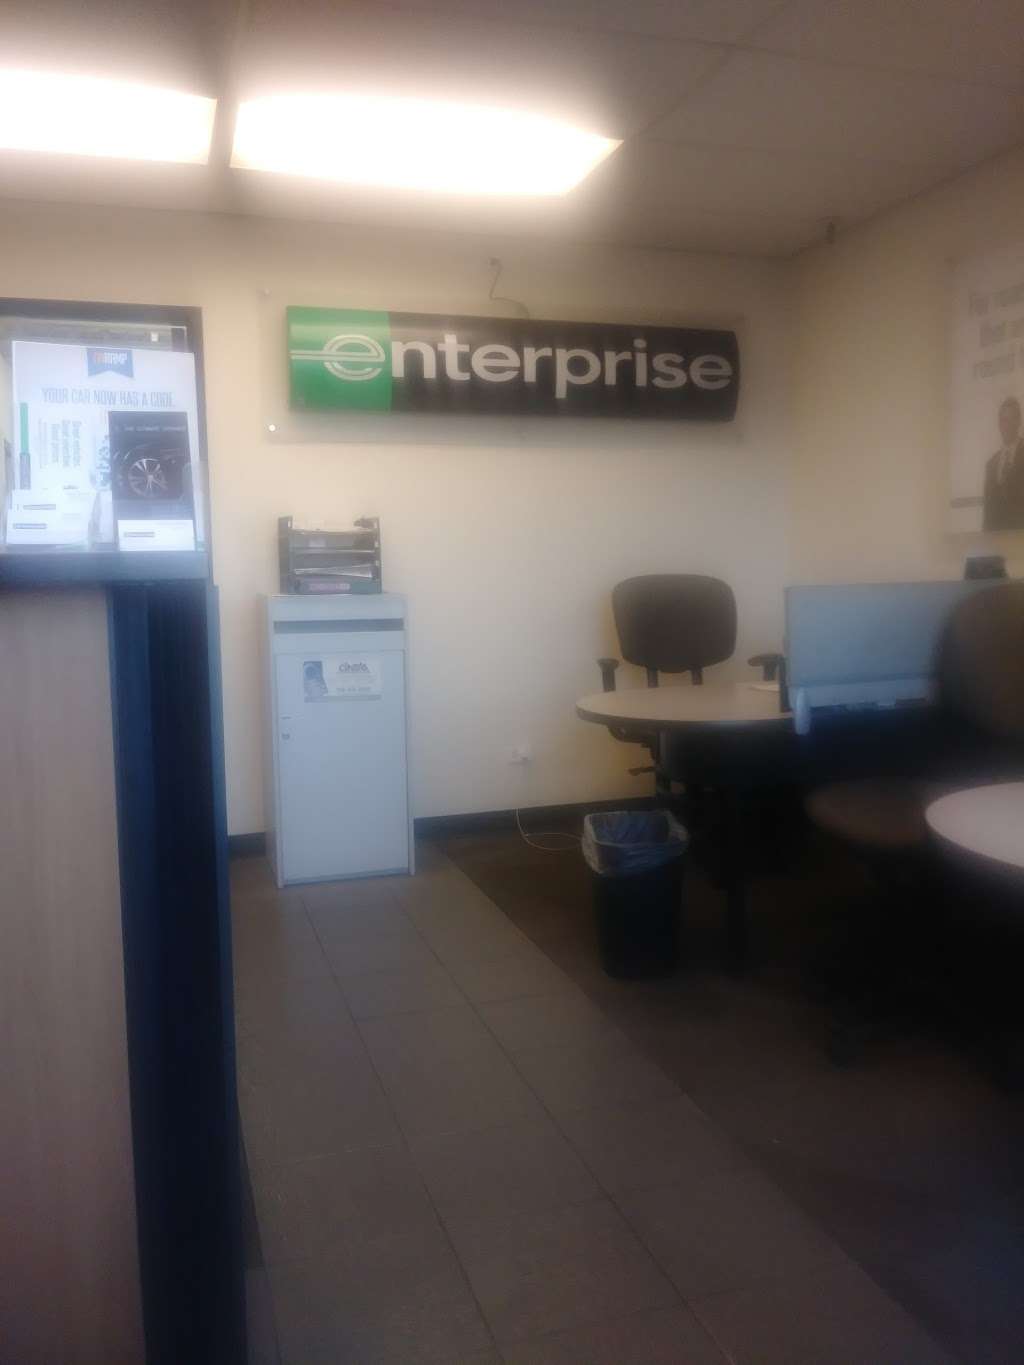 Enterprise Rent-A-Car | 3115 N Beacon St, North Chicago, IL 60064 | Phone: (847) 473-5290